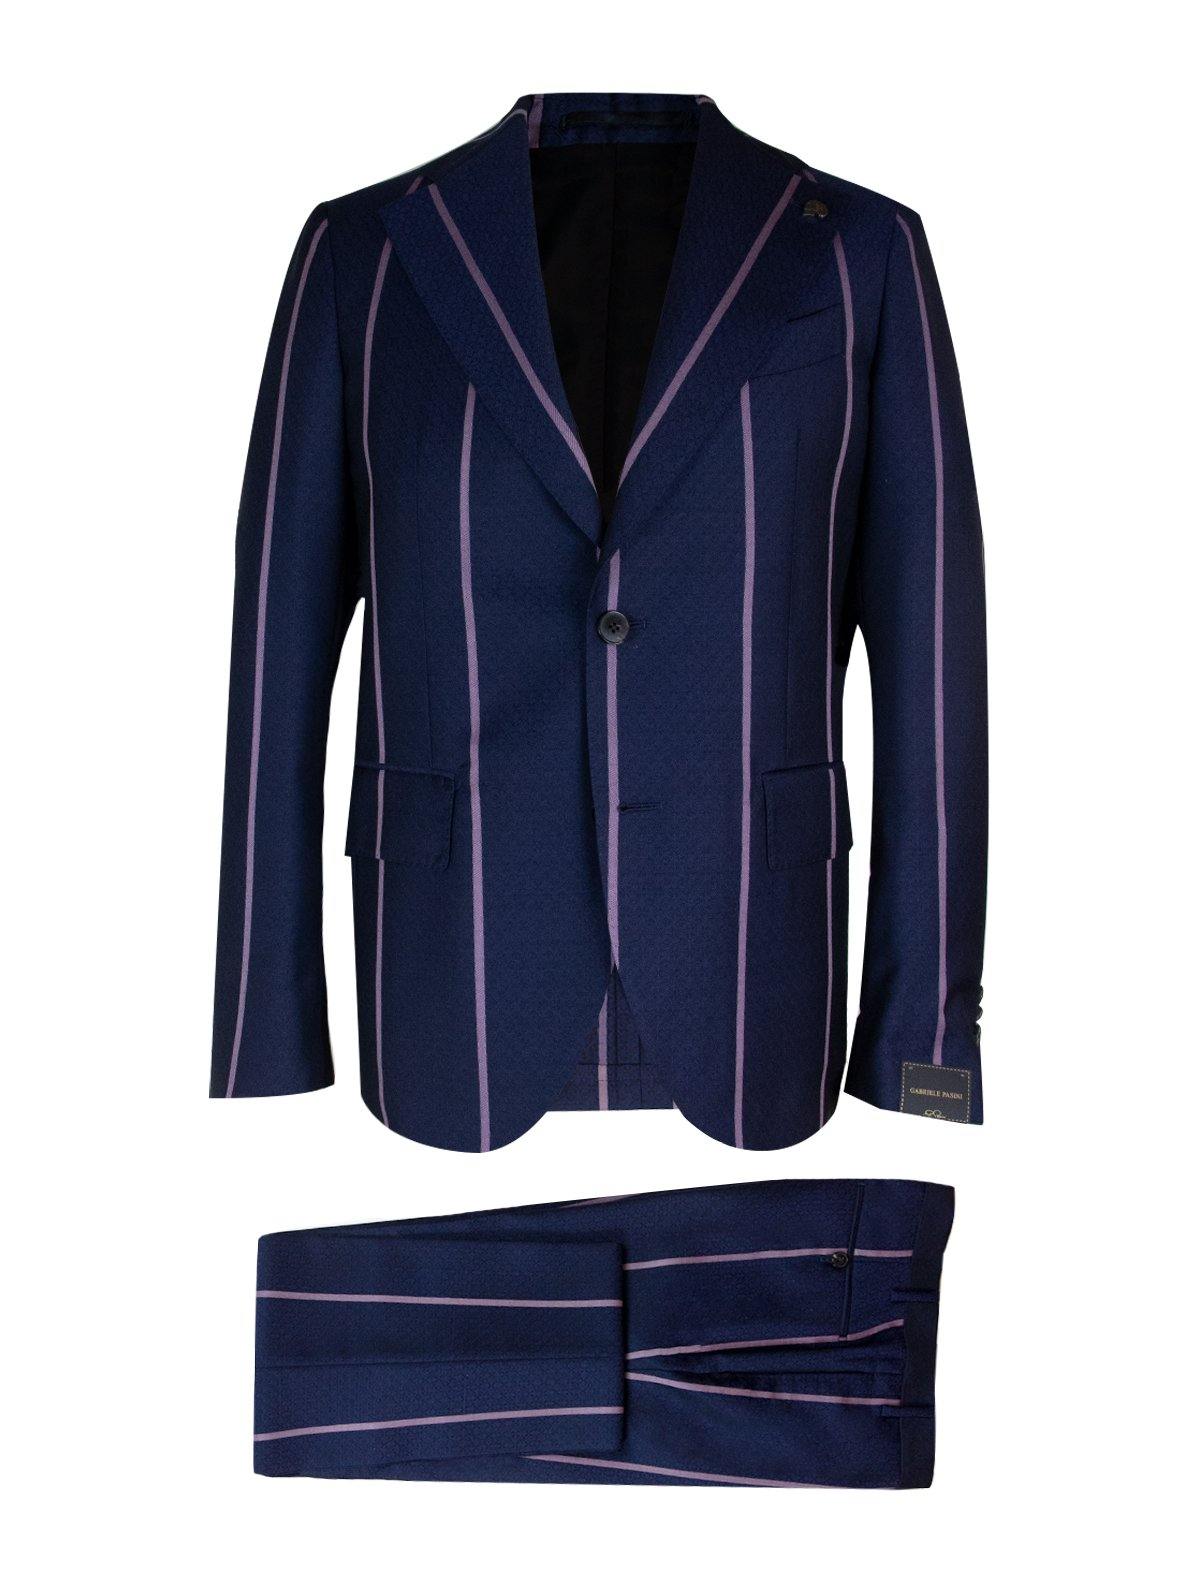 GABRIELE PASINI 2-Piece Wool Suits in Navy Diamond Twill and Purple Stripes | CLOSET Singapore